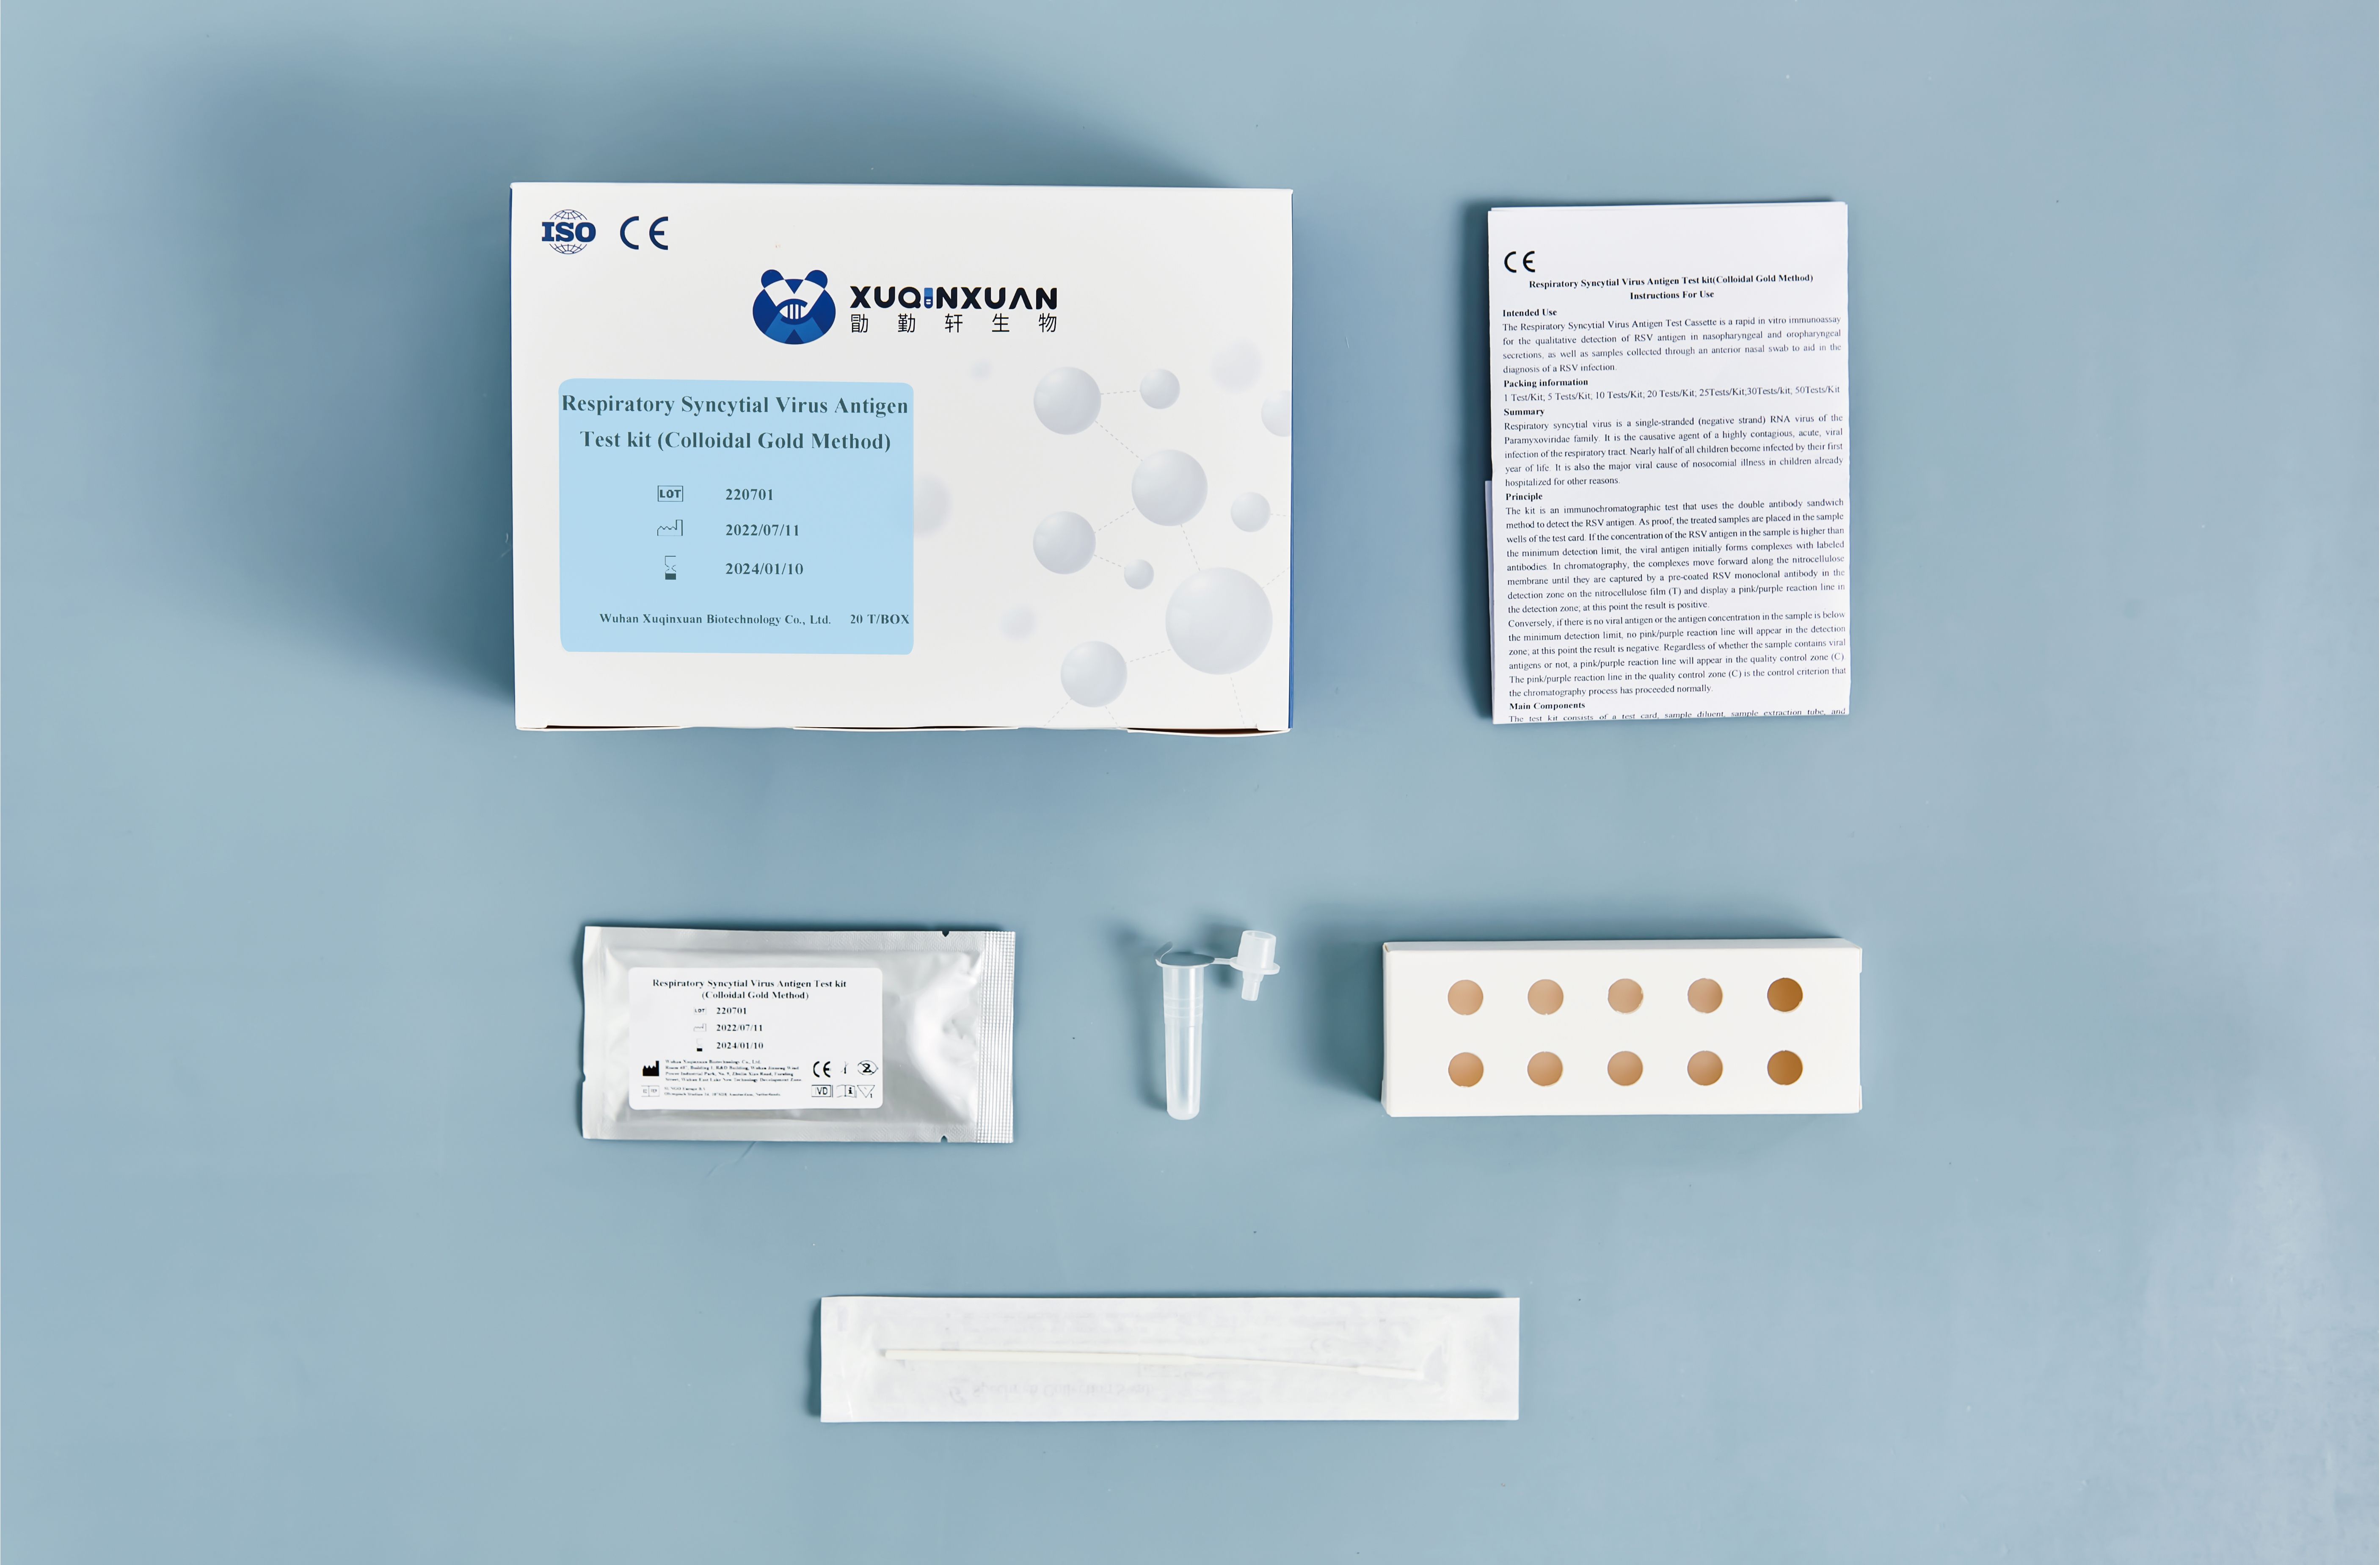 Respiratory Syncytial Virus Antigen Test kit(Colloidal Gold Method) 